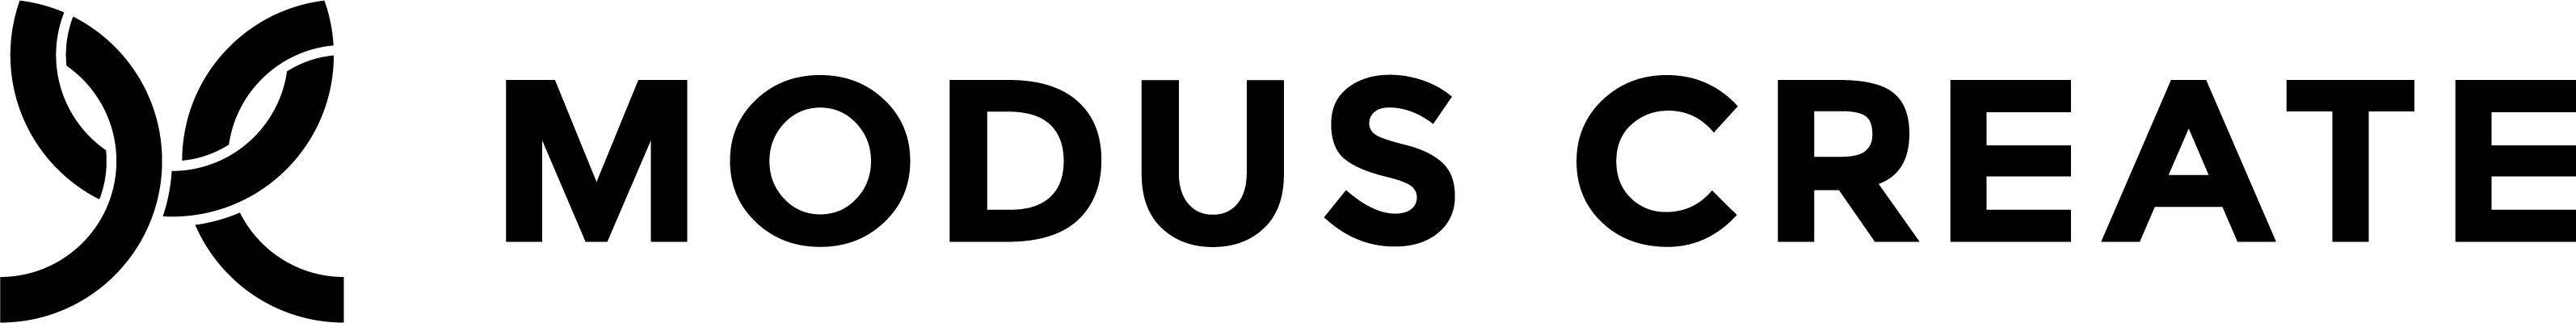 Logo van Modus Create